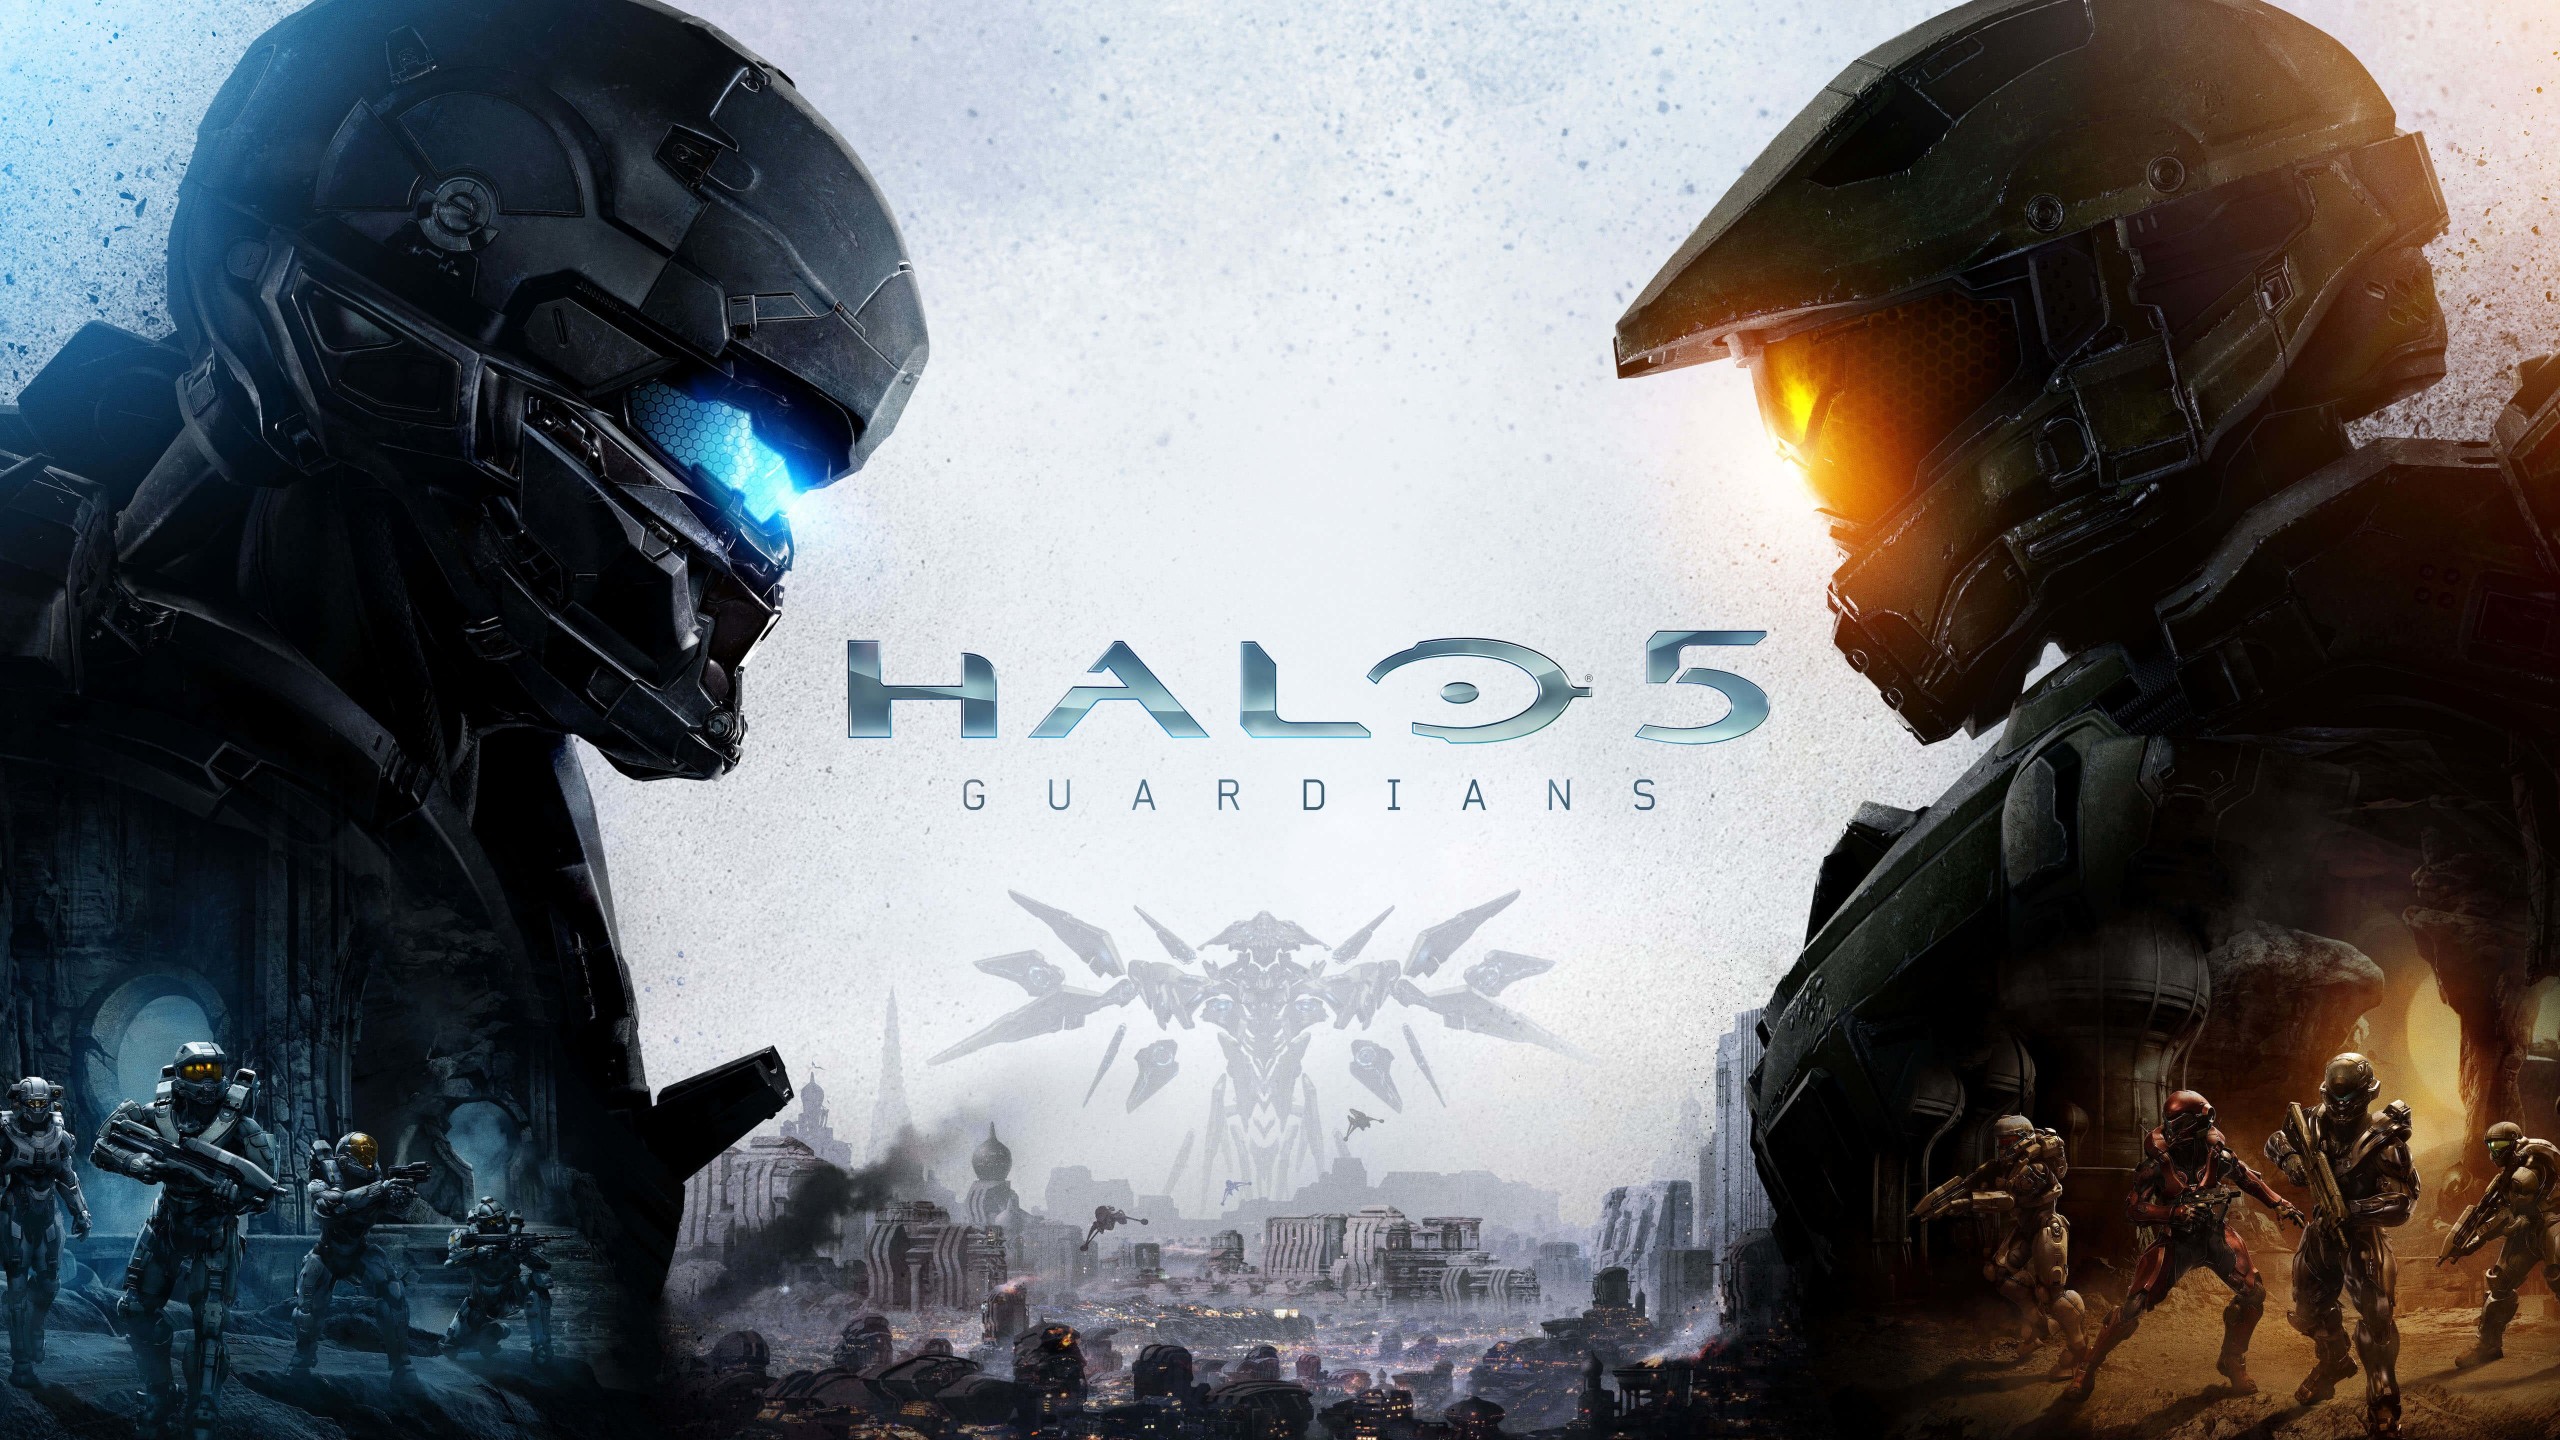 Halo 5: Guardians Wallpaper for Social Media YouTube Channel Art